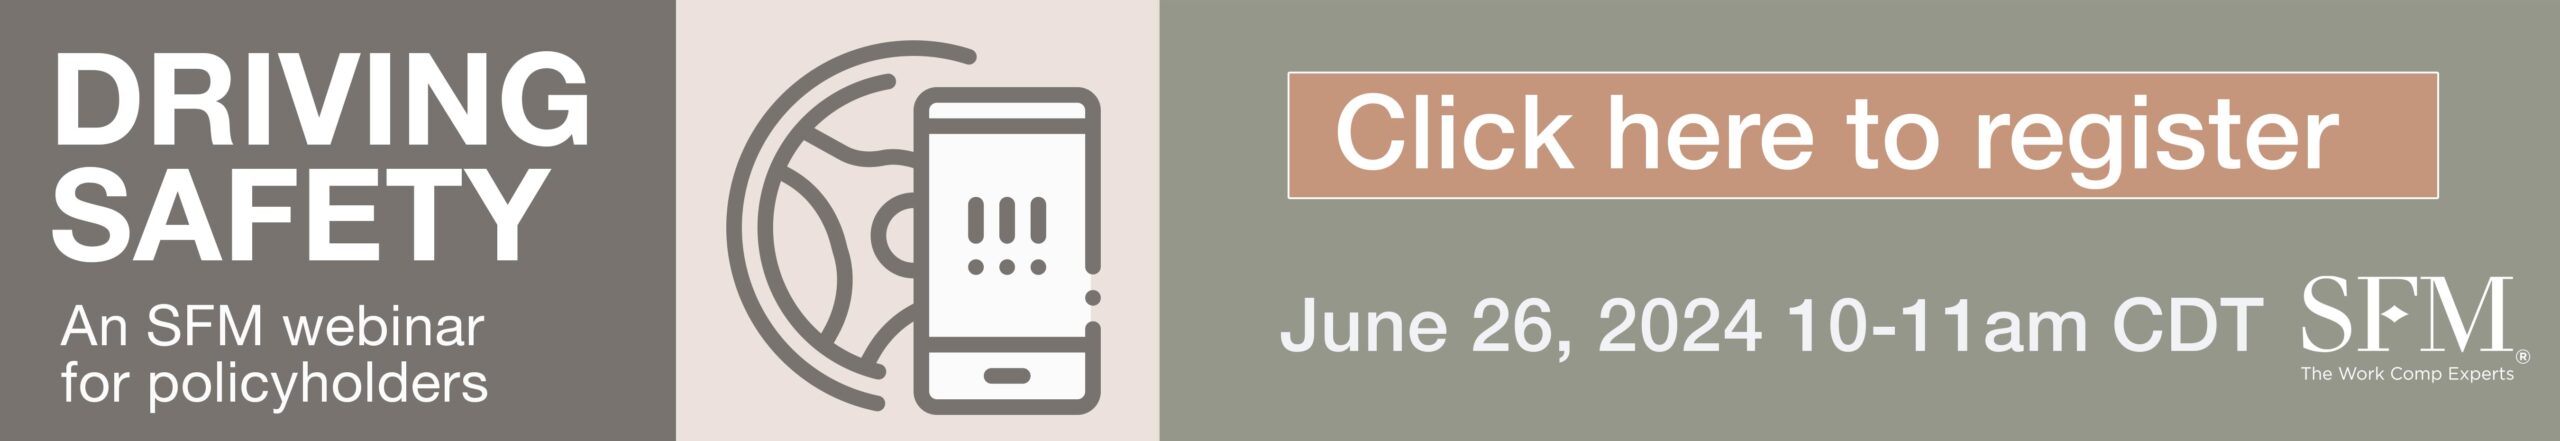 Driving Safety: An SFM webinar for policyholders | June 26, 2024 10-11 am CDT